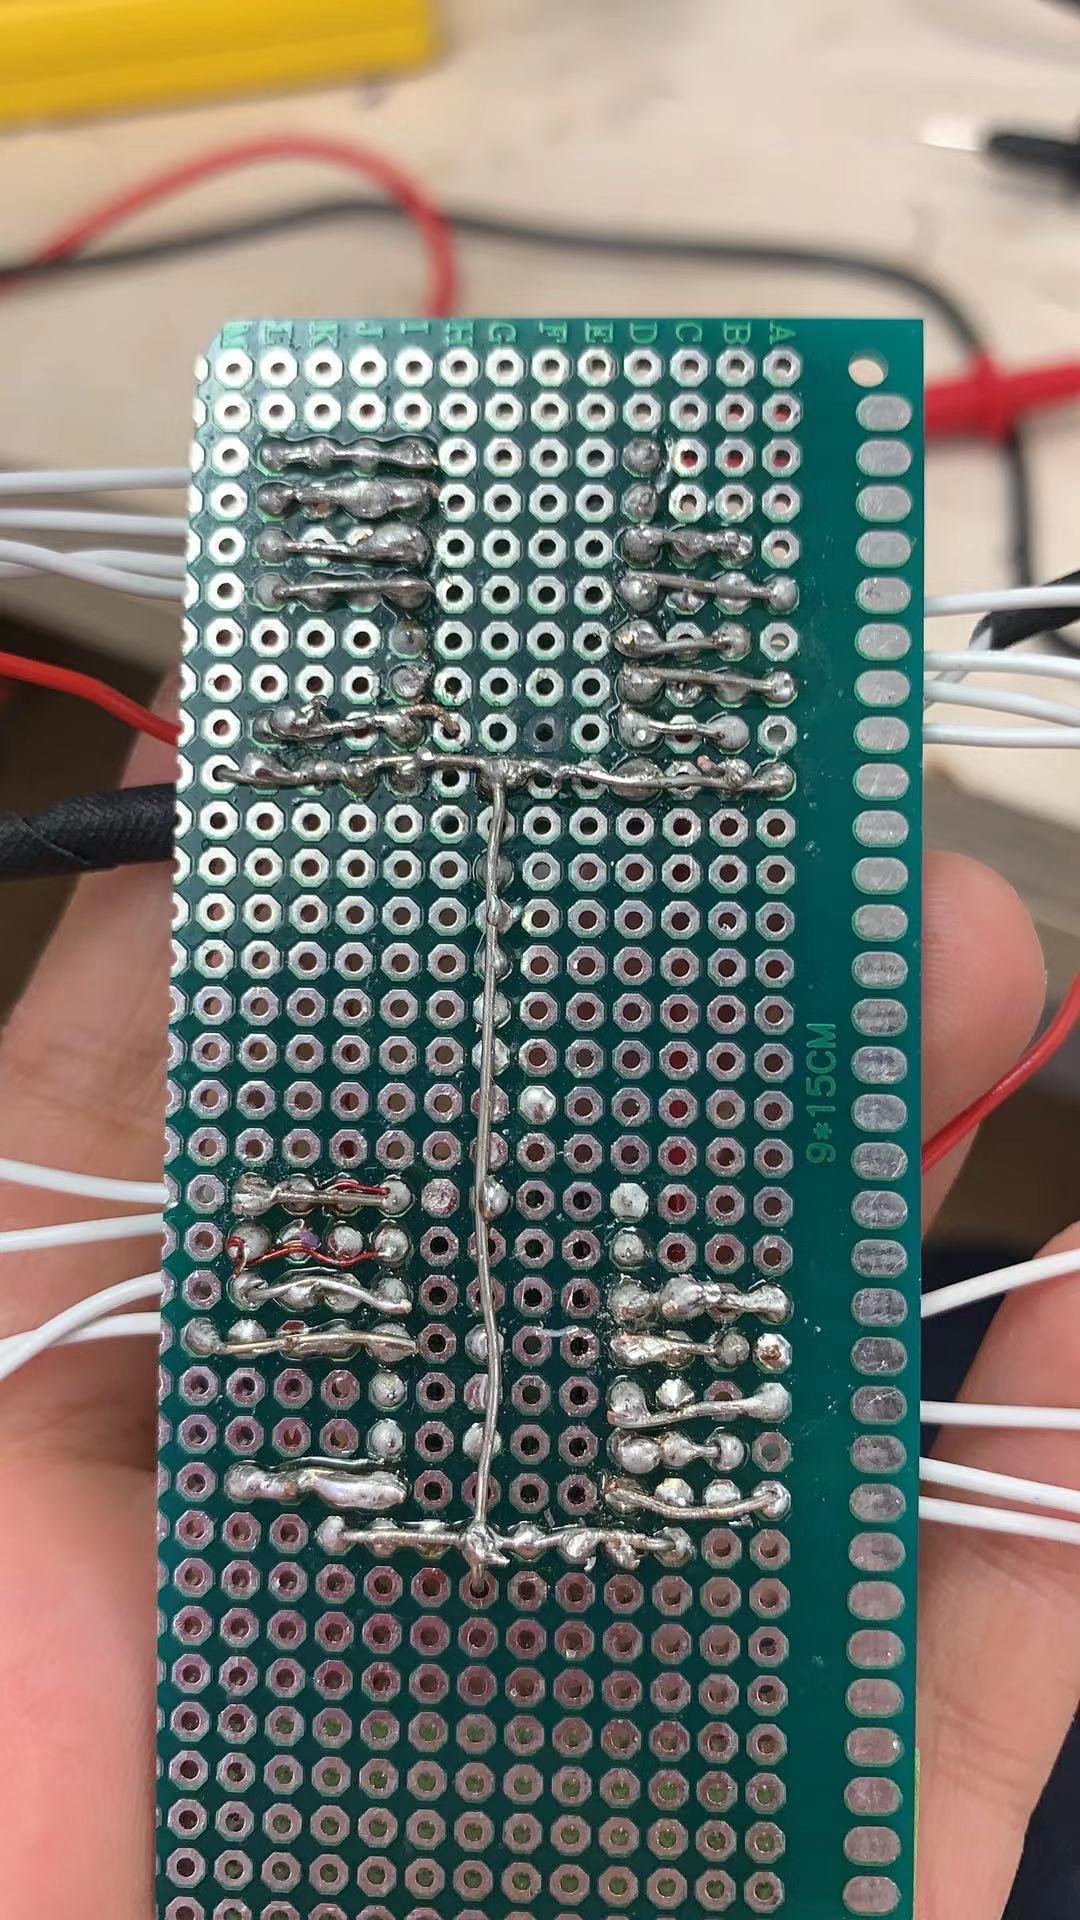 soldering of circuit